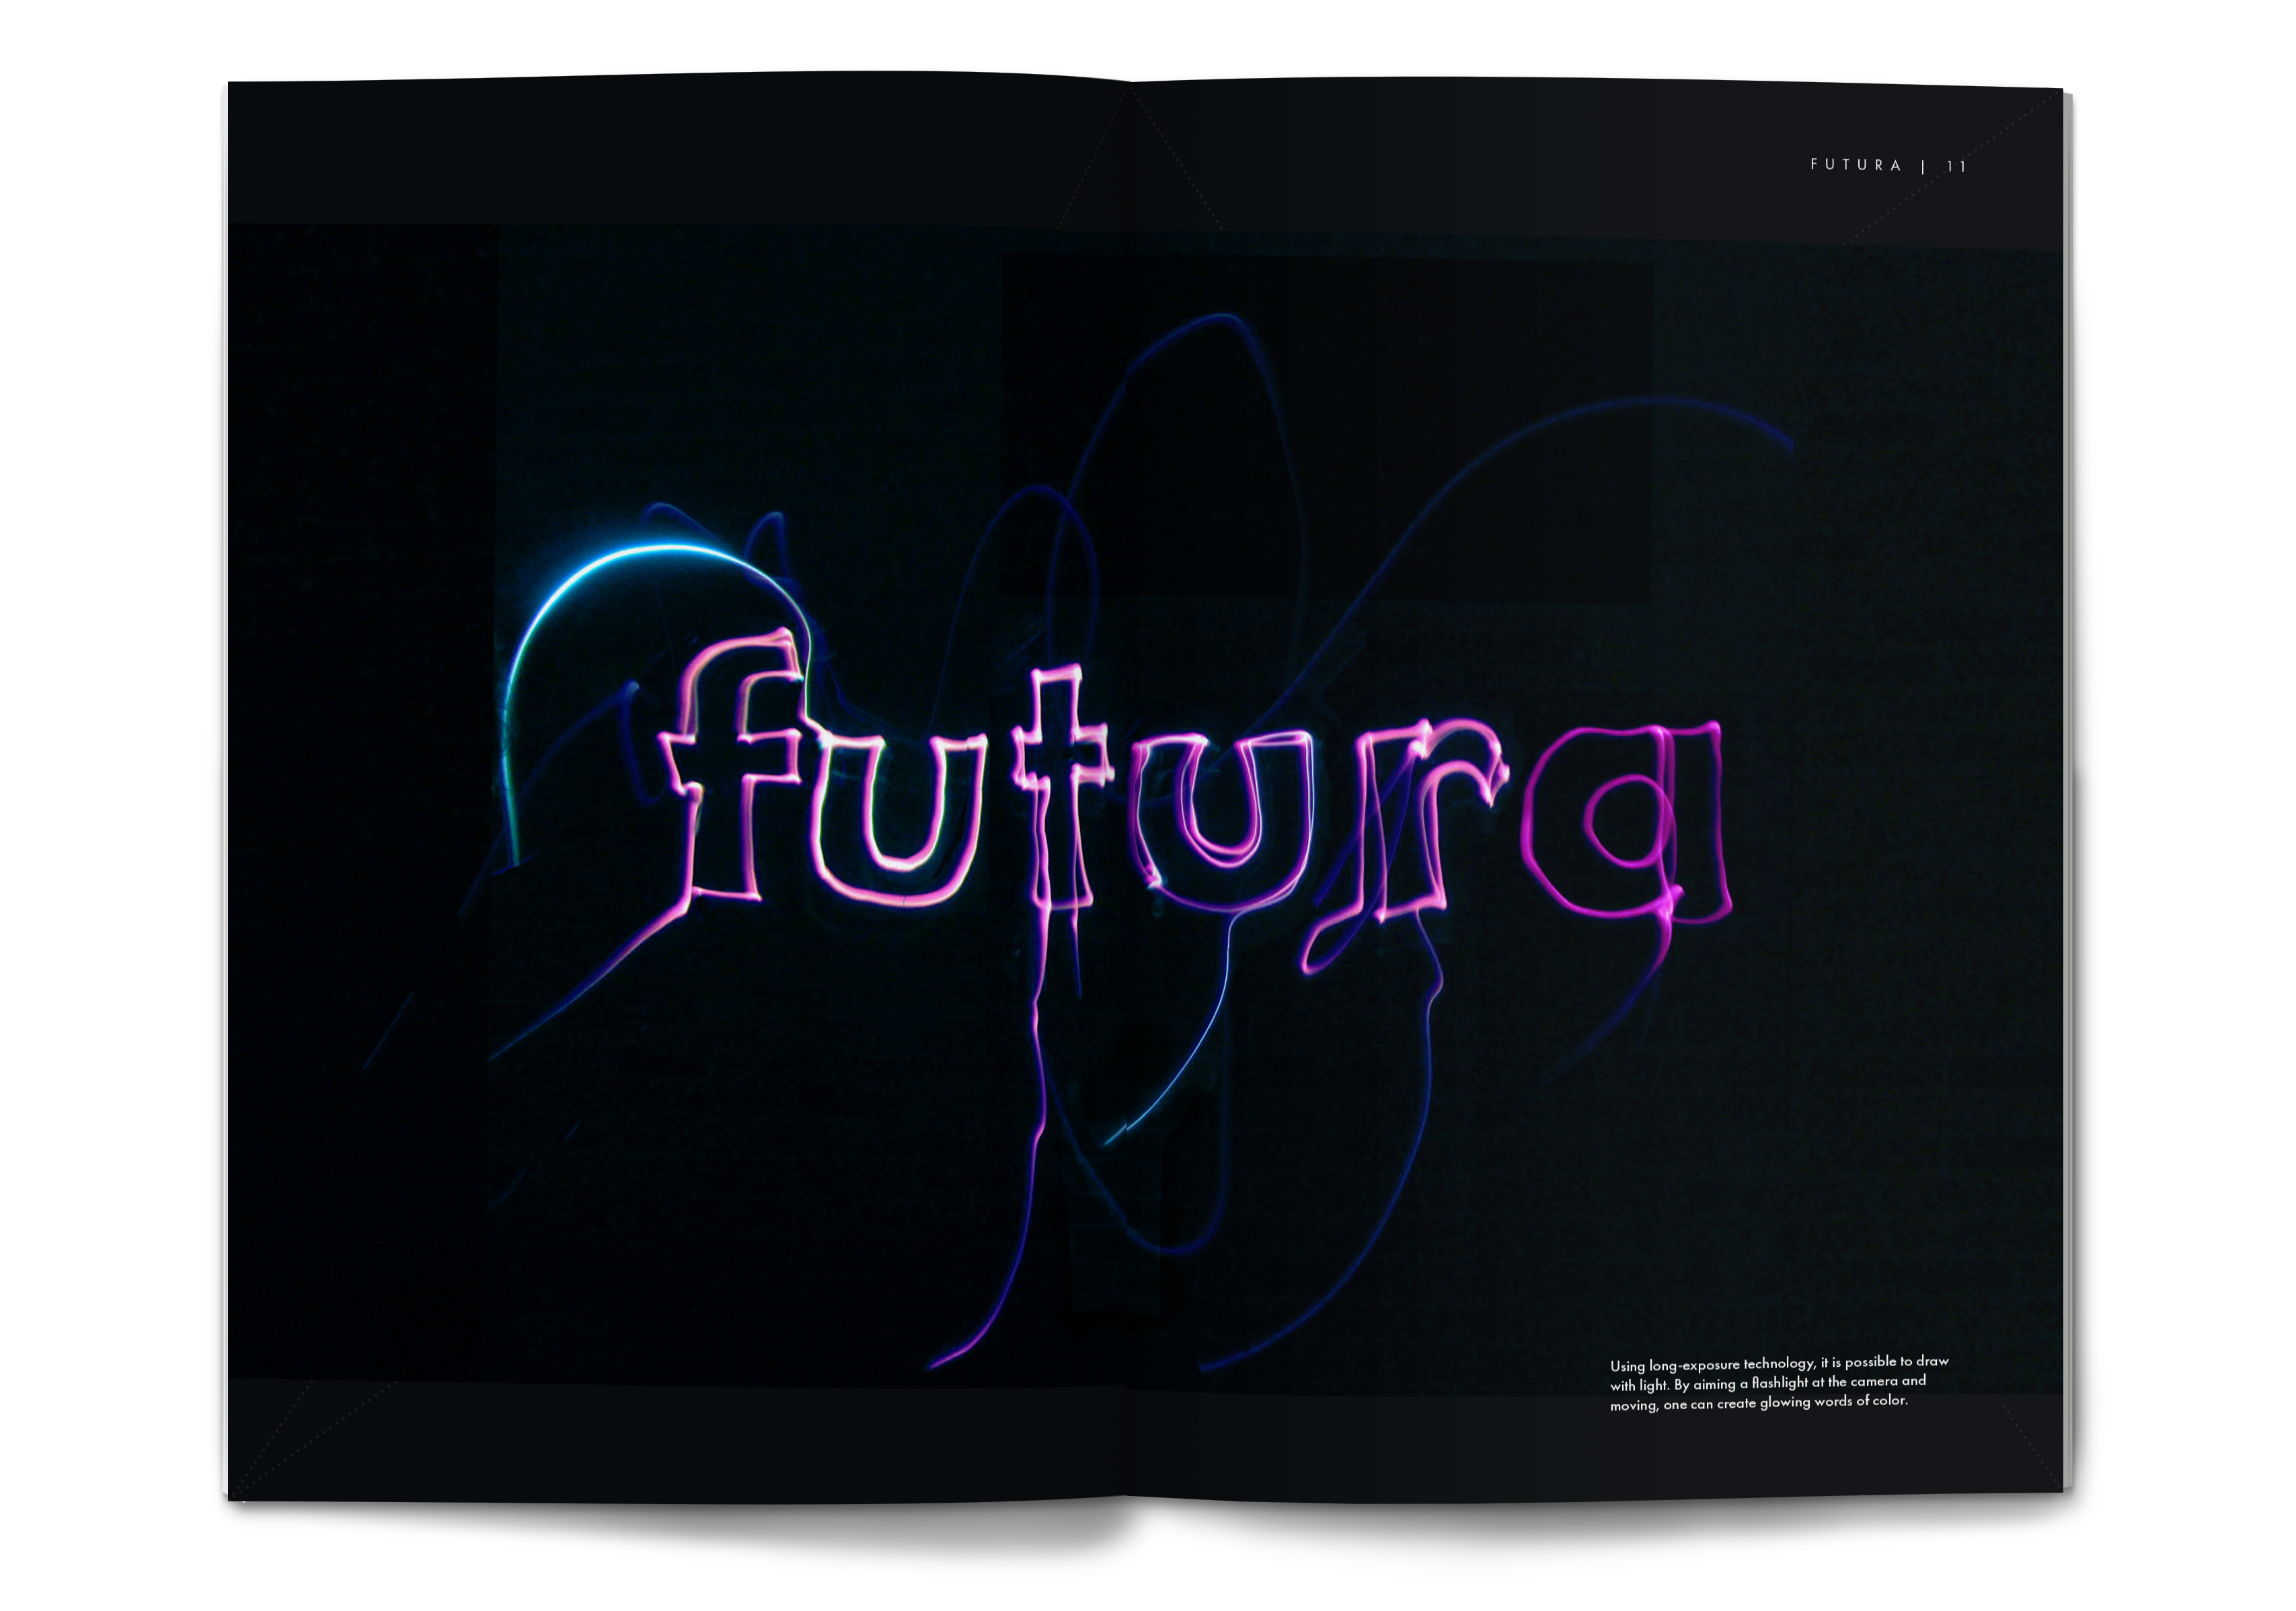 mockup of futura zine showing light writing reading 'futura'